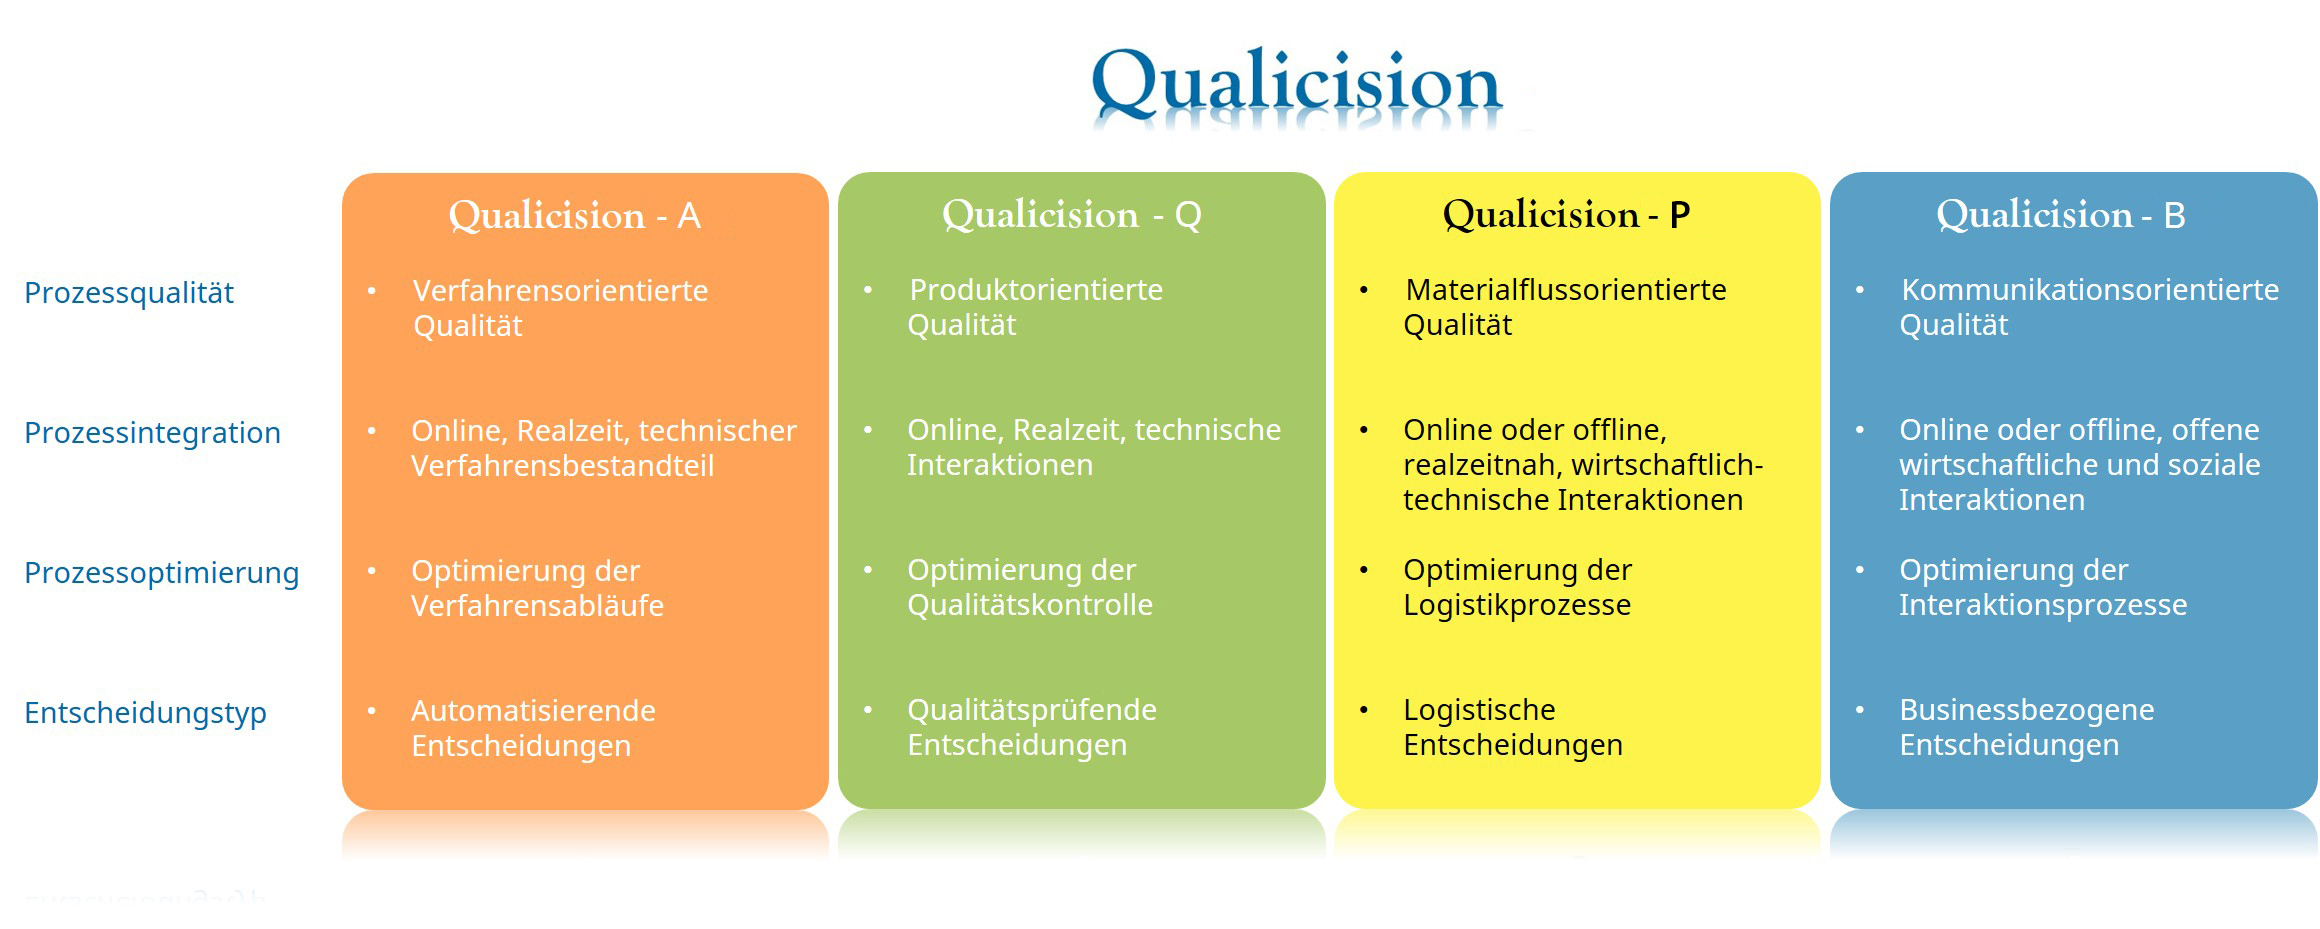 Qualicision_html